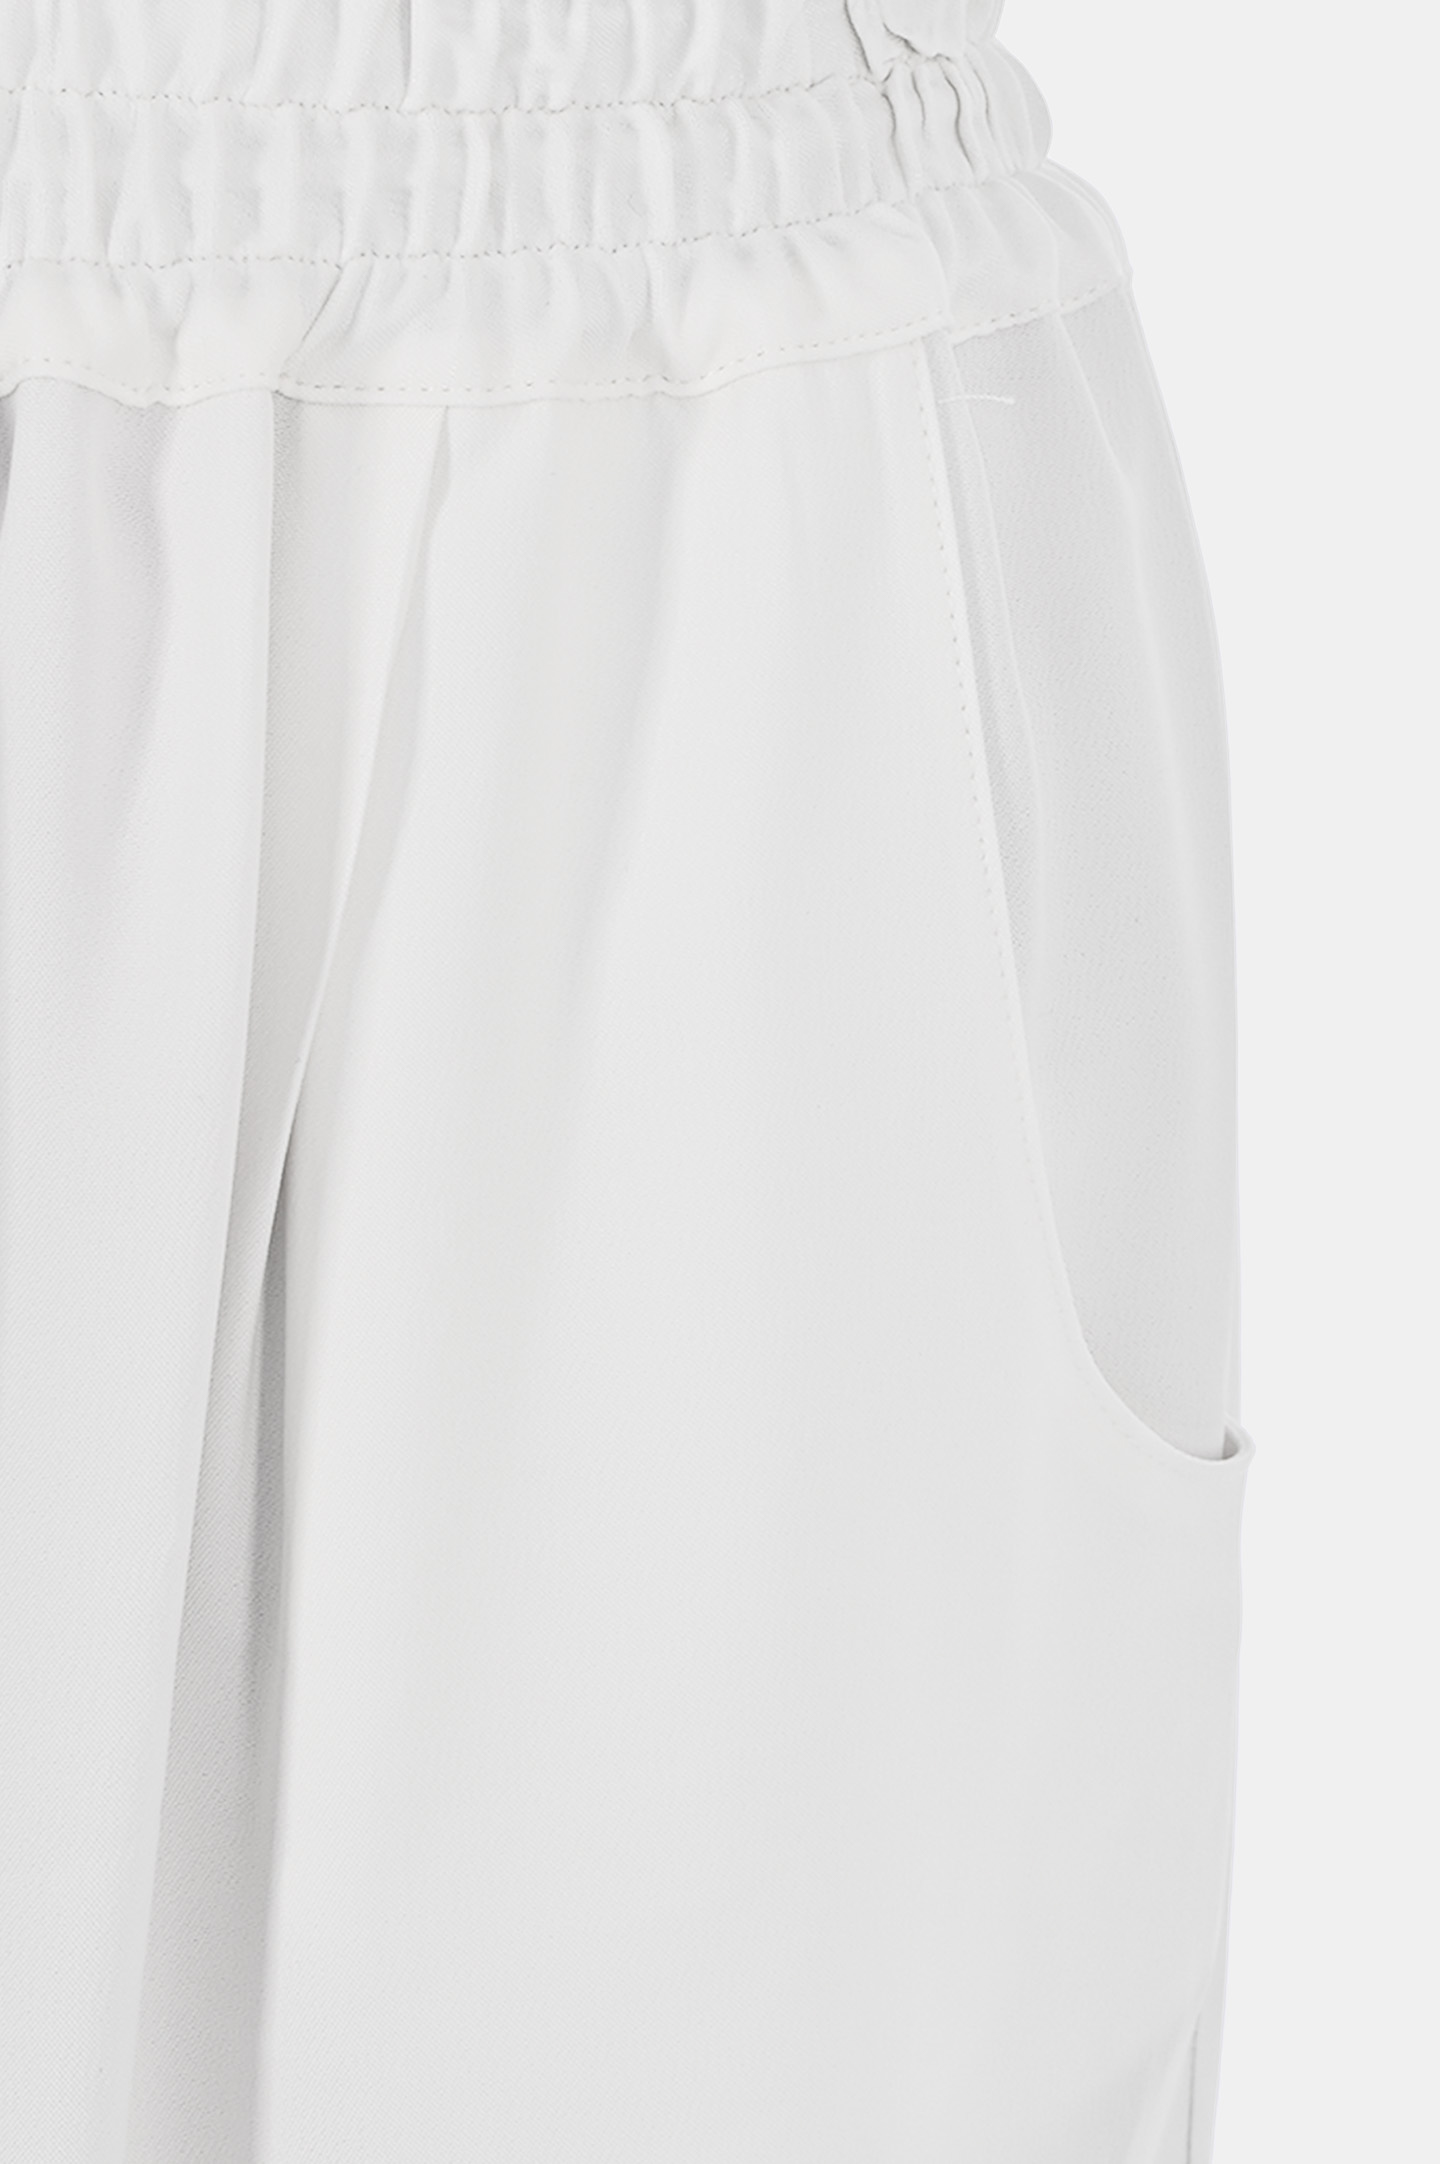 Широкие брюки из вискозы и эластана KITON D57105K0956C0, цвет: Белый, Женский